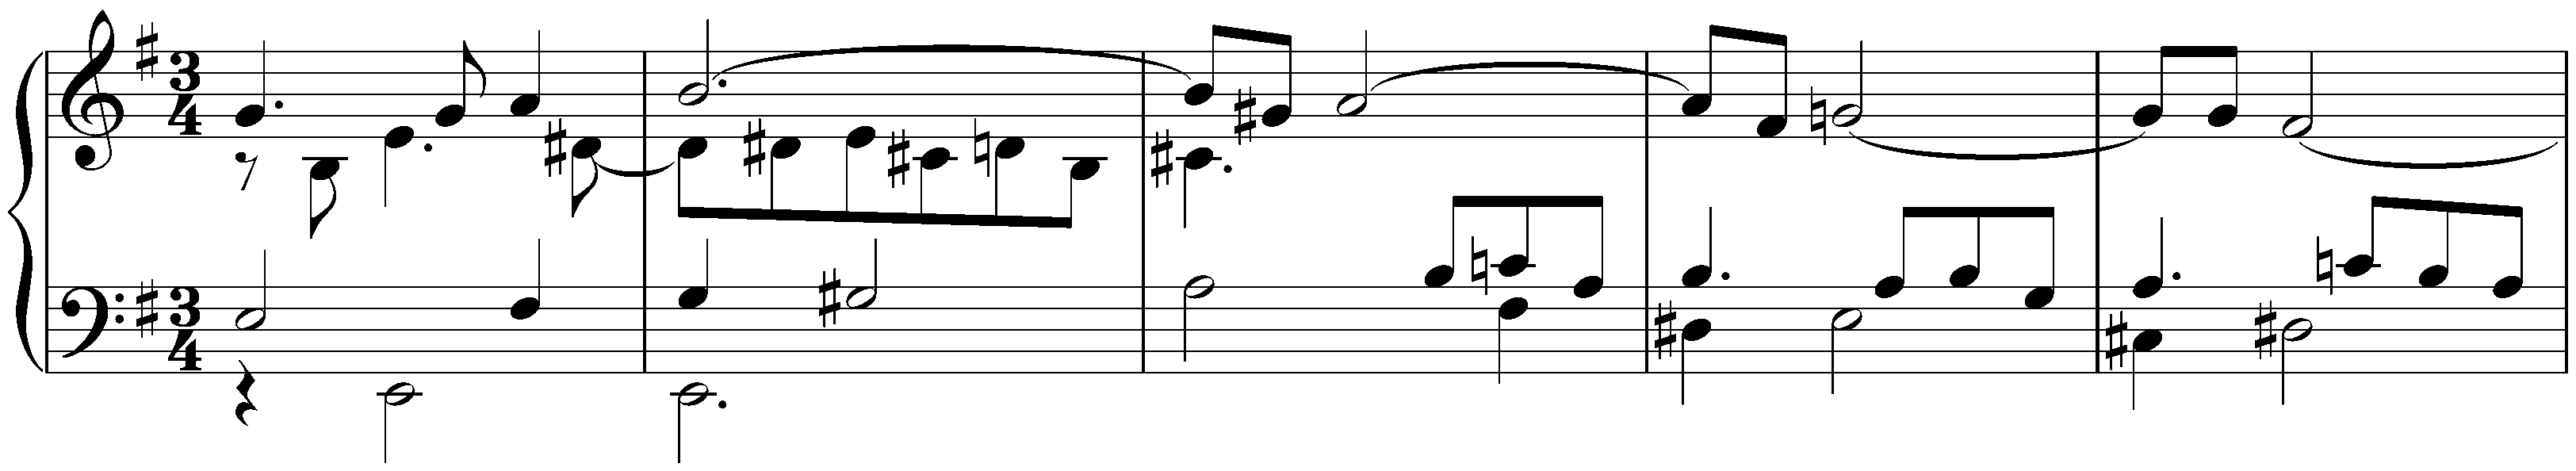 Suite in E minor, HWV 438; 2. Sarabande